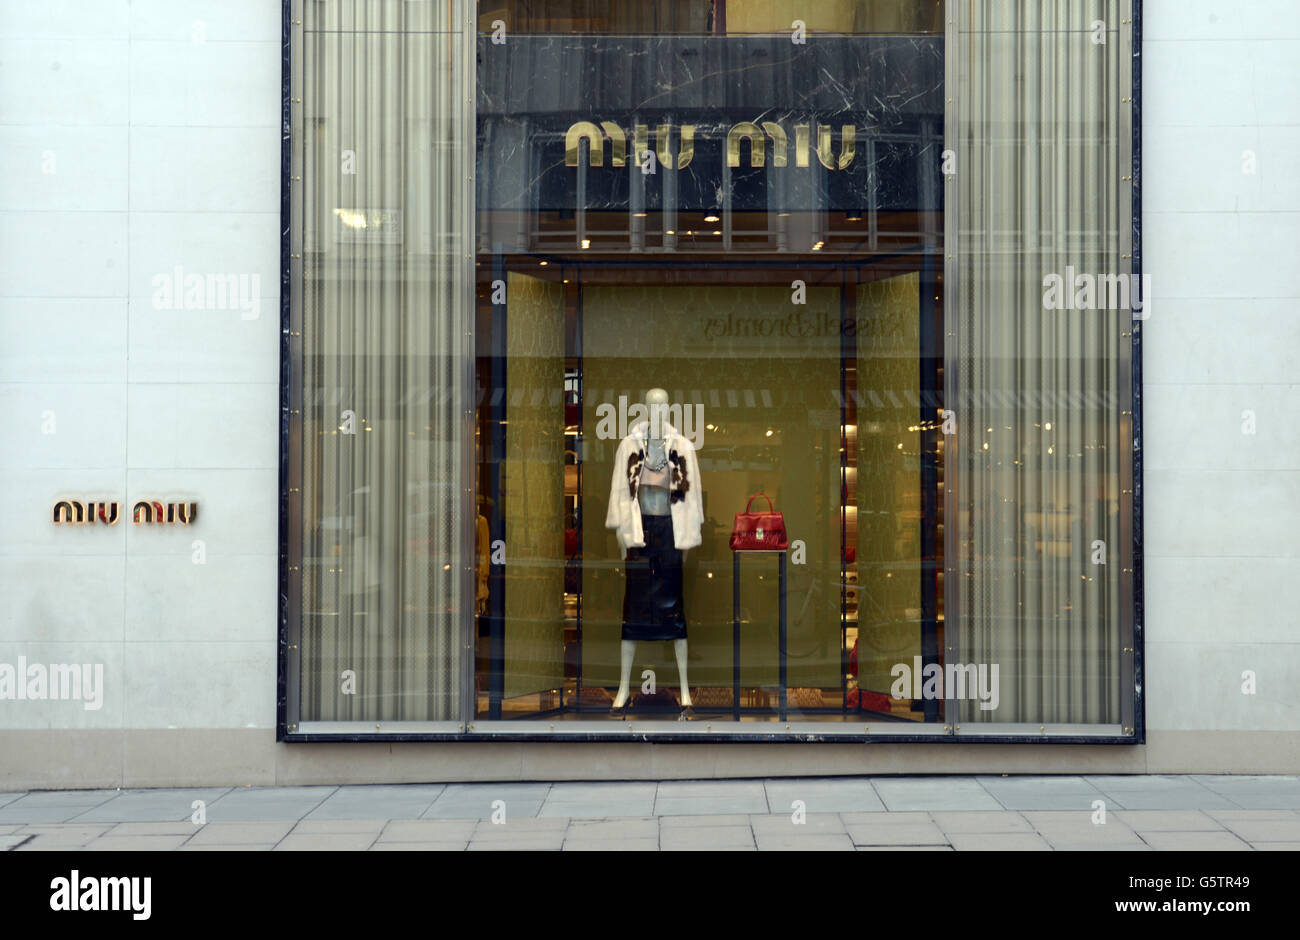 Stock image of the Miu Miu shop in New Bond Street, London. Stock Photo